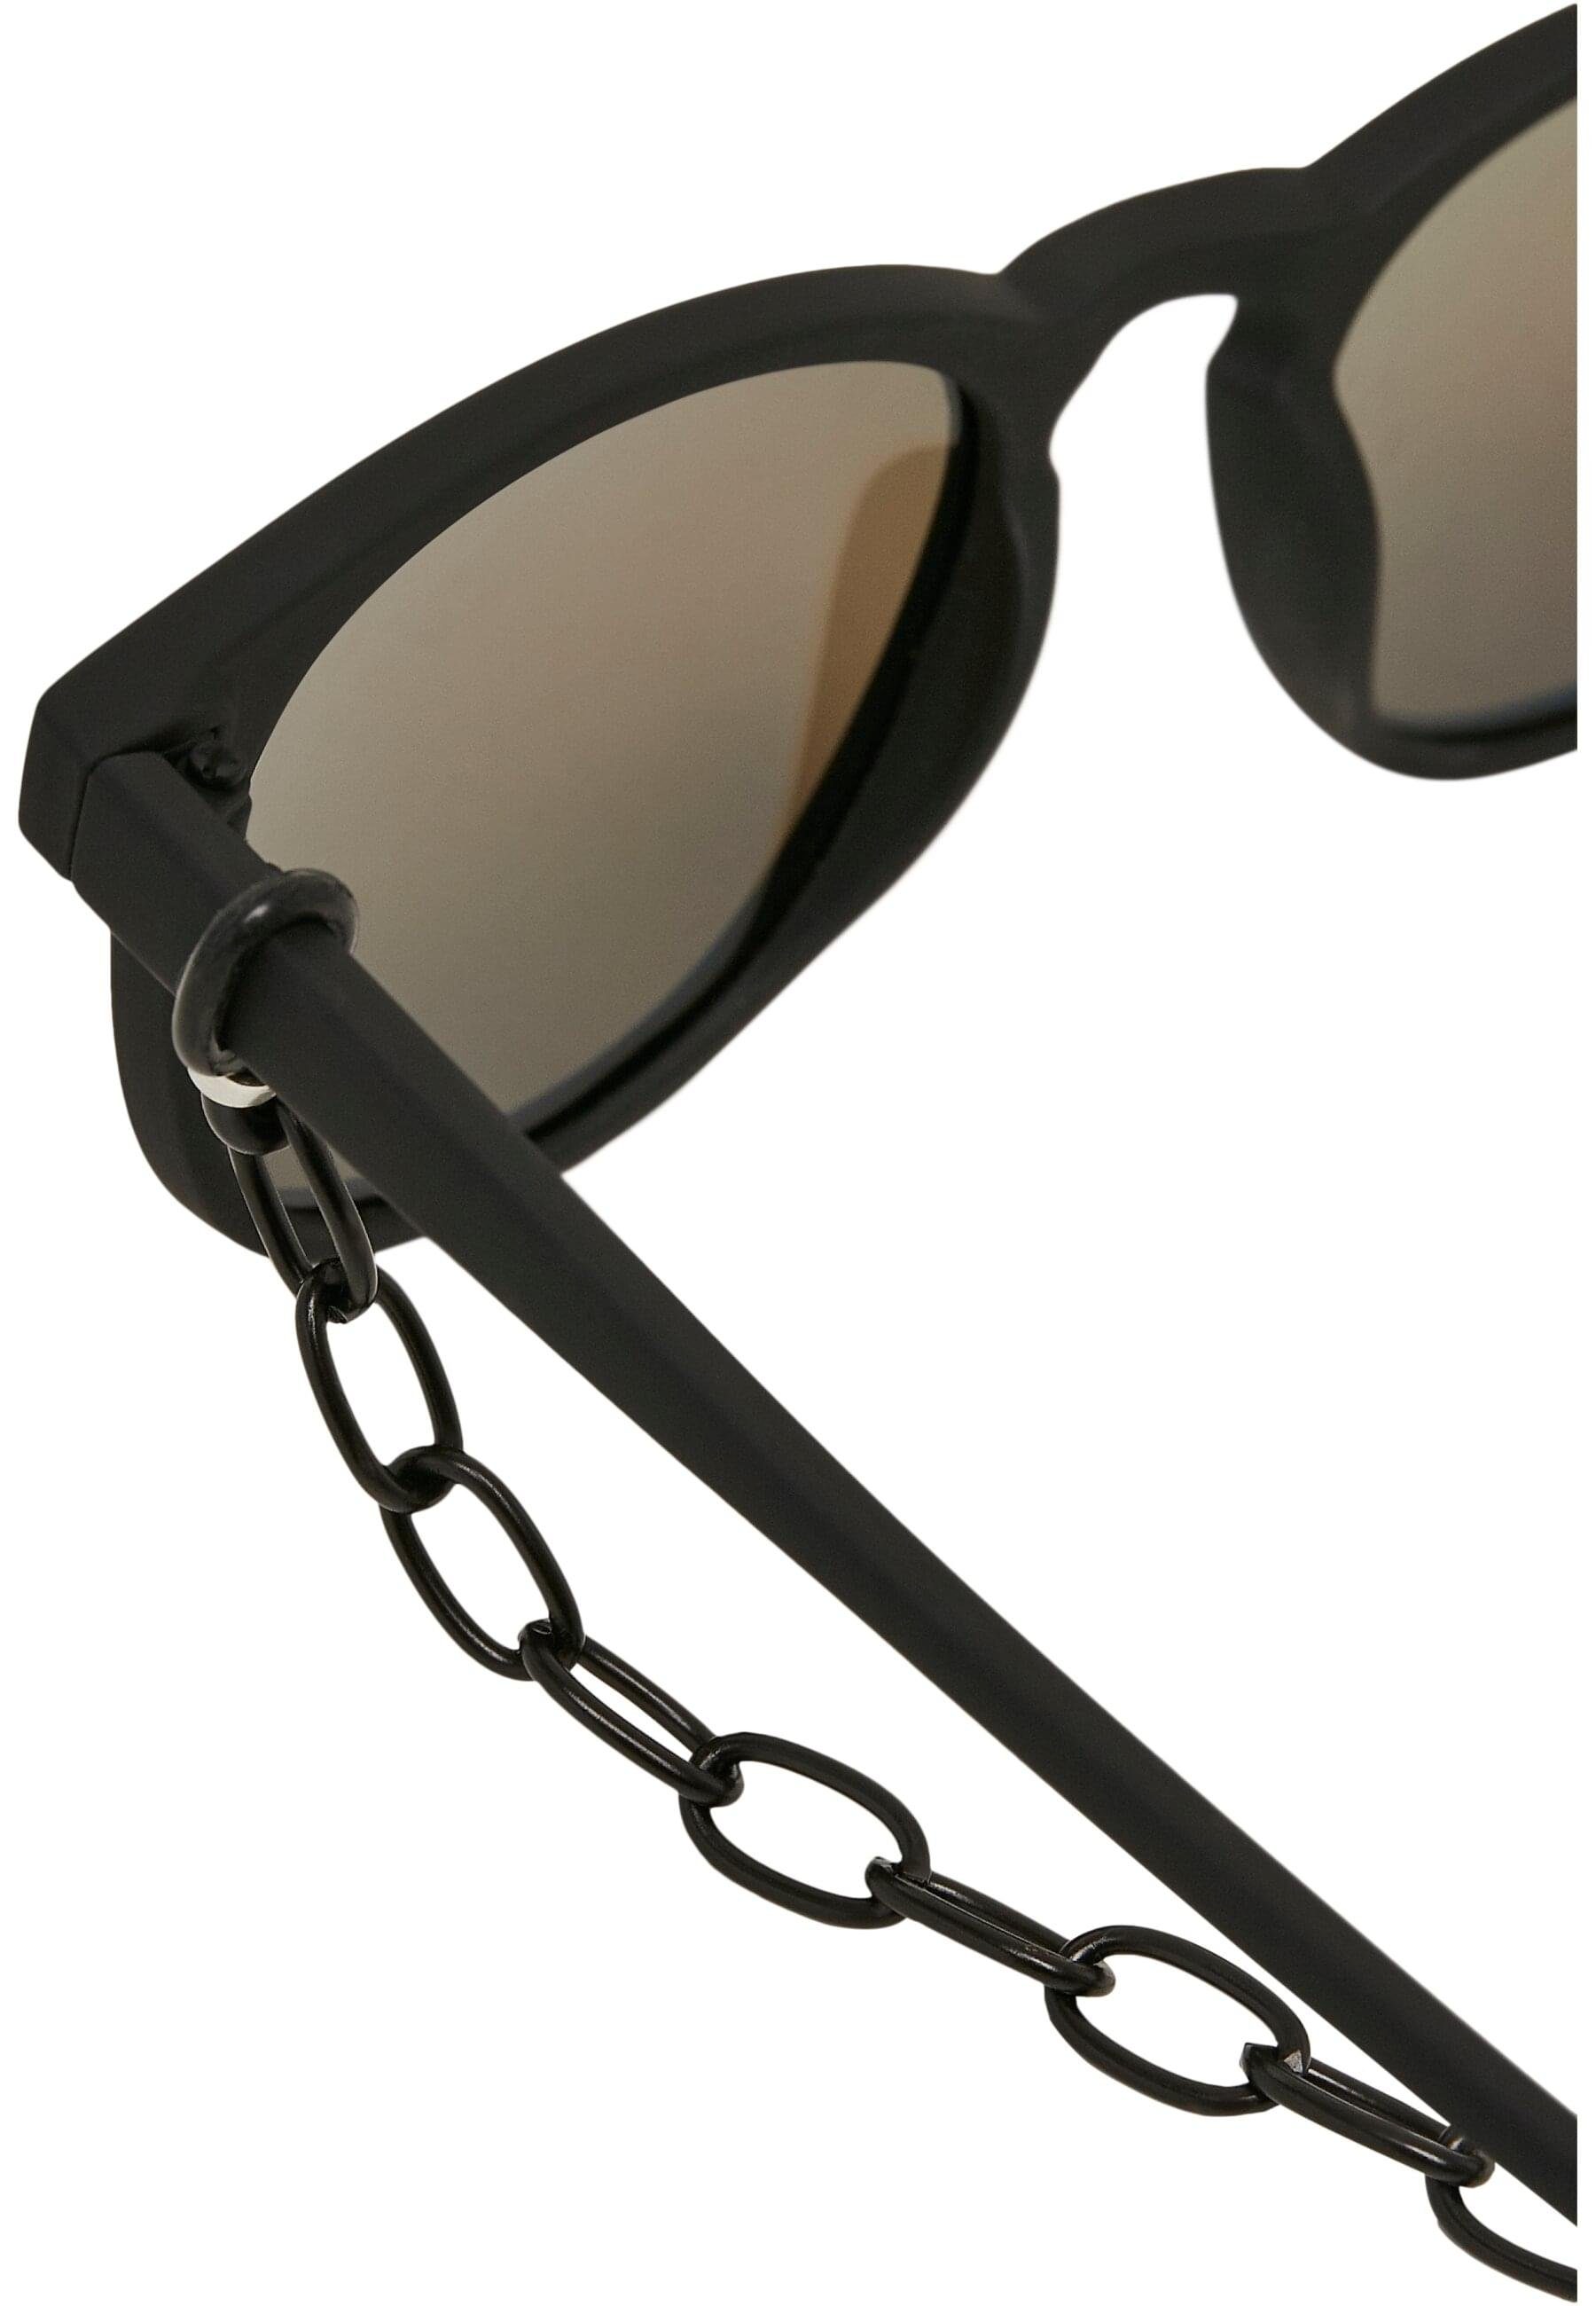 URBAN CLASSICS Sunglasses with Unisex black/blue Sonnenbrille Arthur Chain